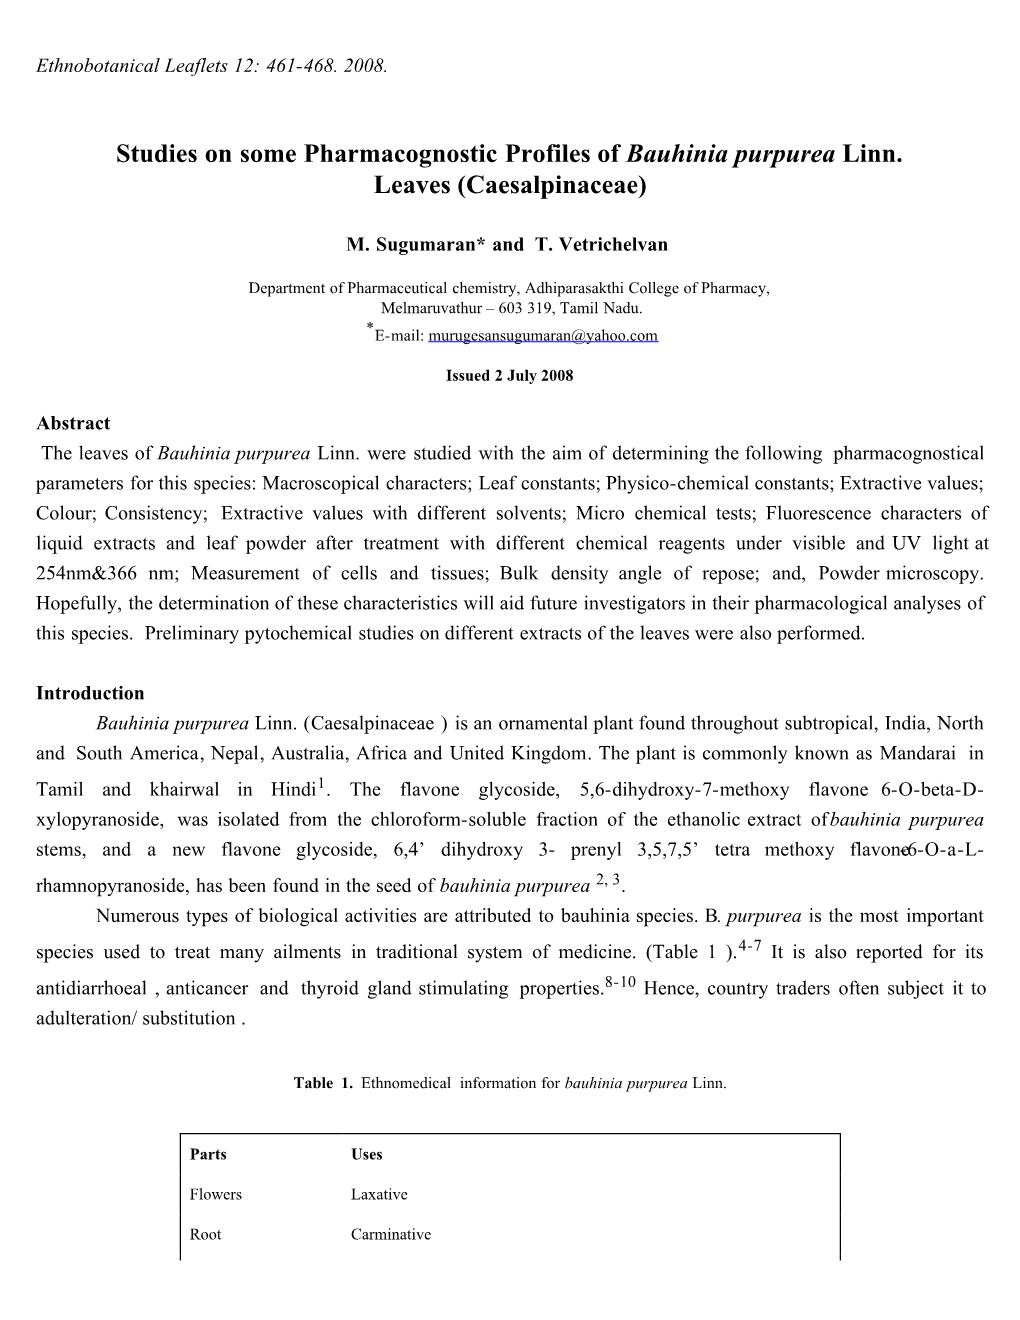 Studies on Some Pharmacognostic Profiles of Bauhinia Purpurea Linn